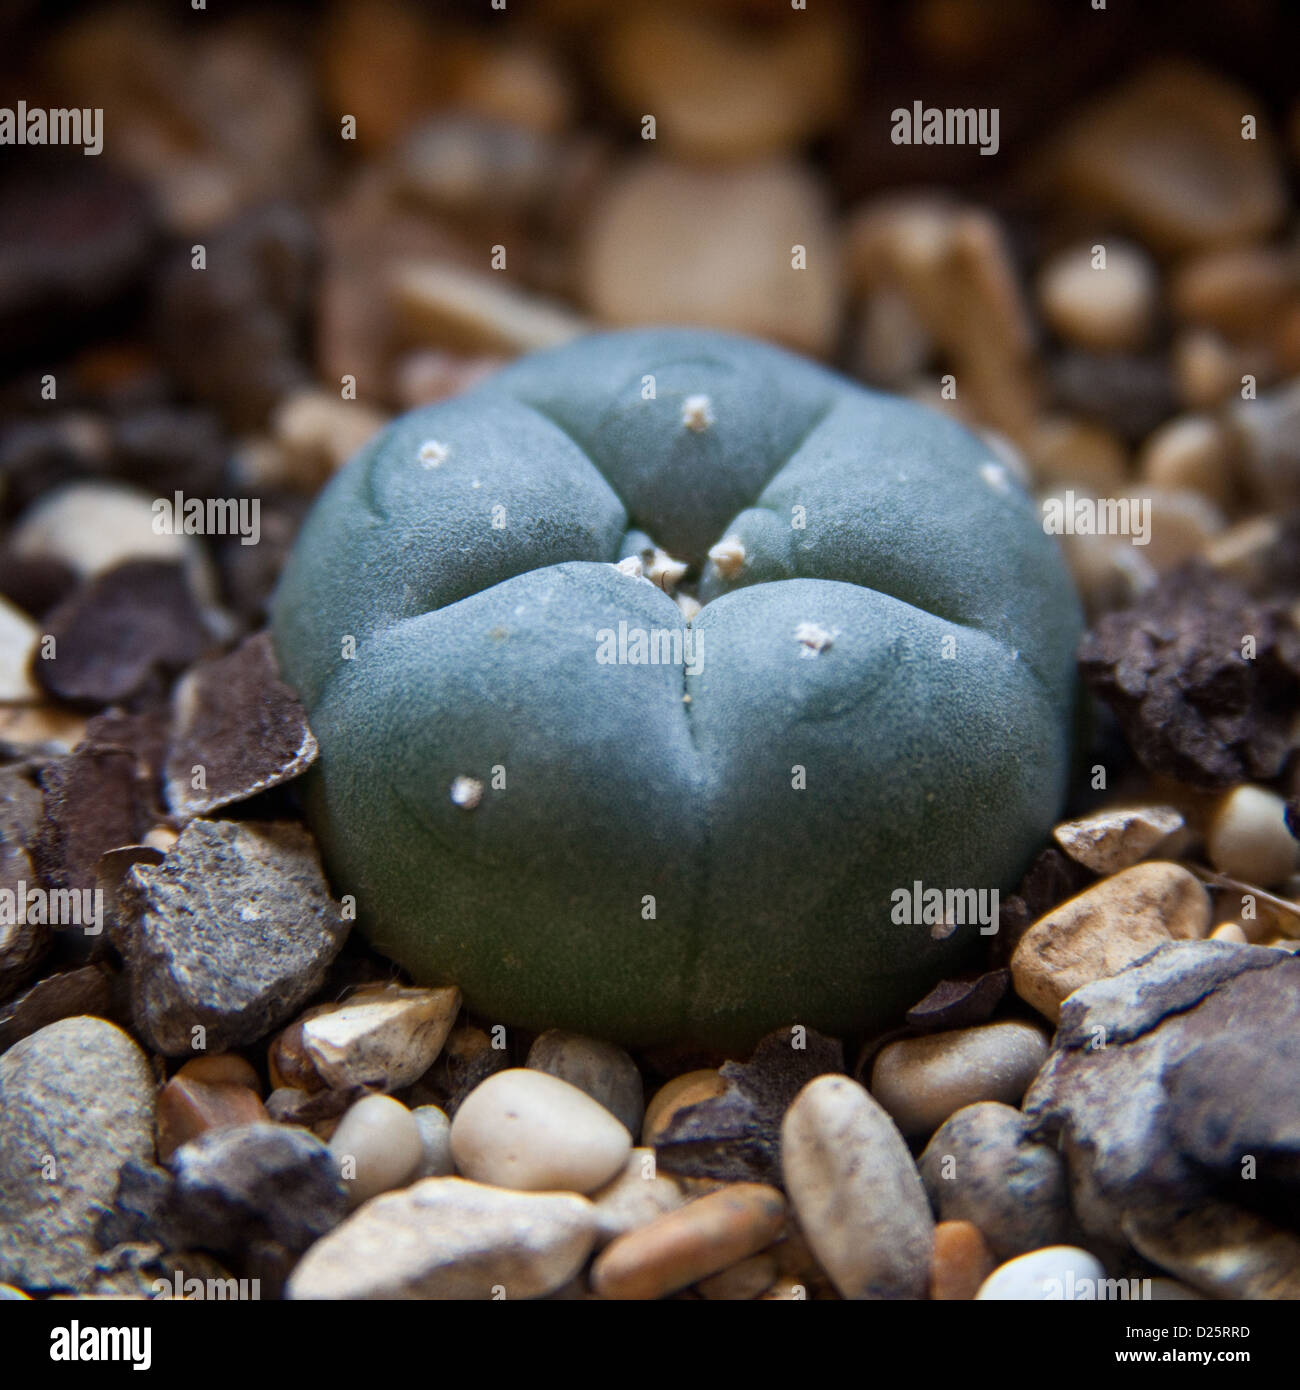 Peyote Kaktus (Lophophora Williamsii), der halluzinogene Droge Meskalin enthält. Stockfoto